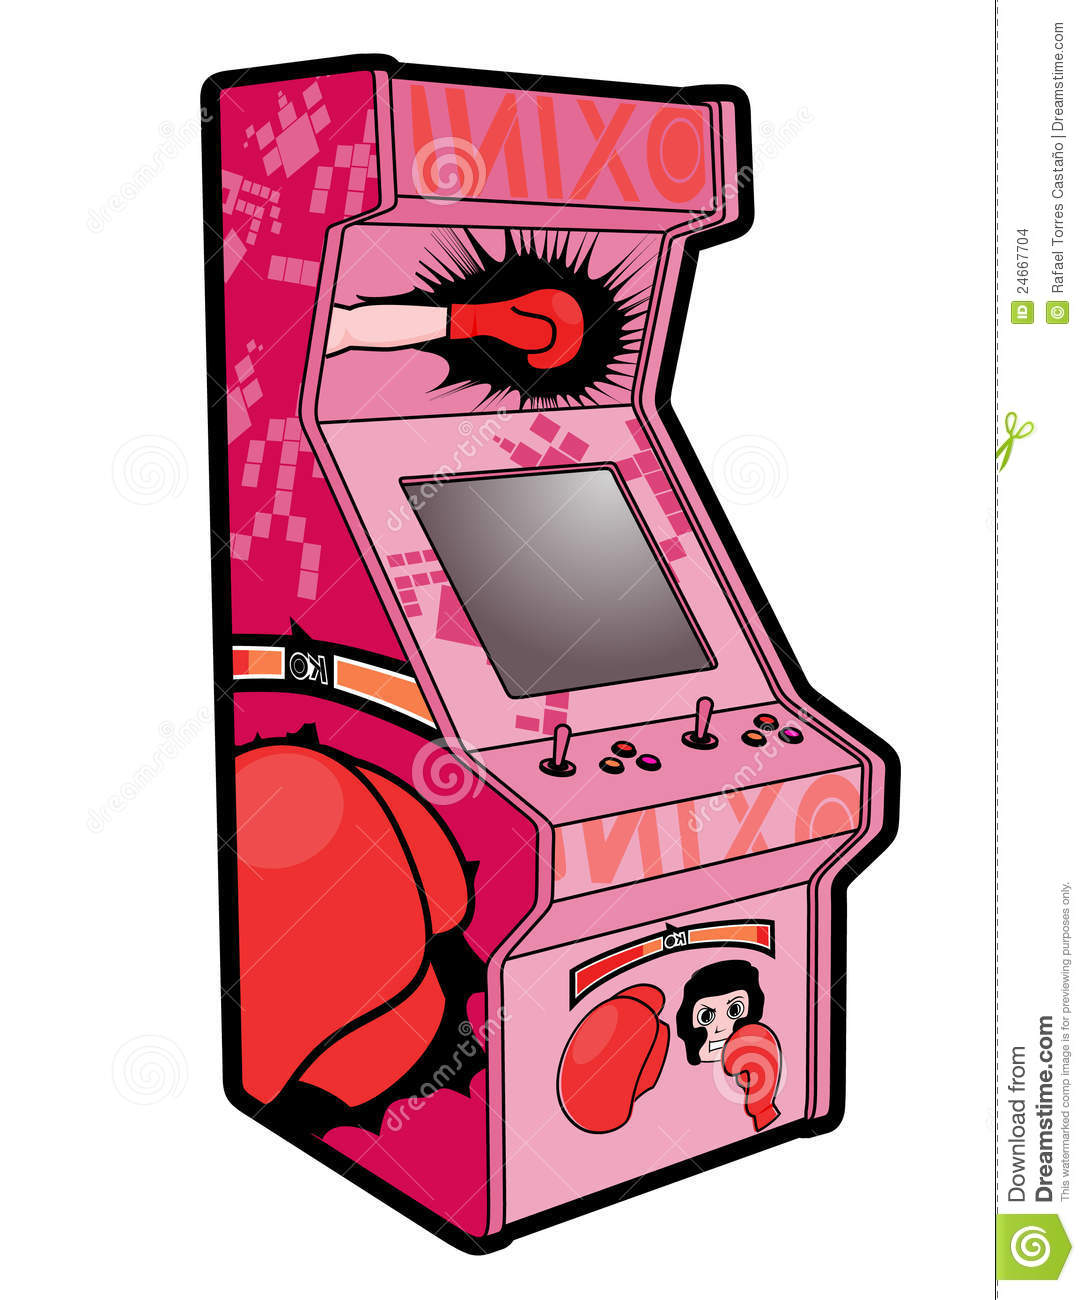 Arcade Fun PNG - 167445